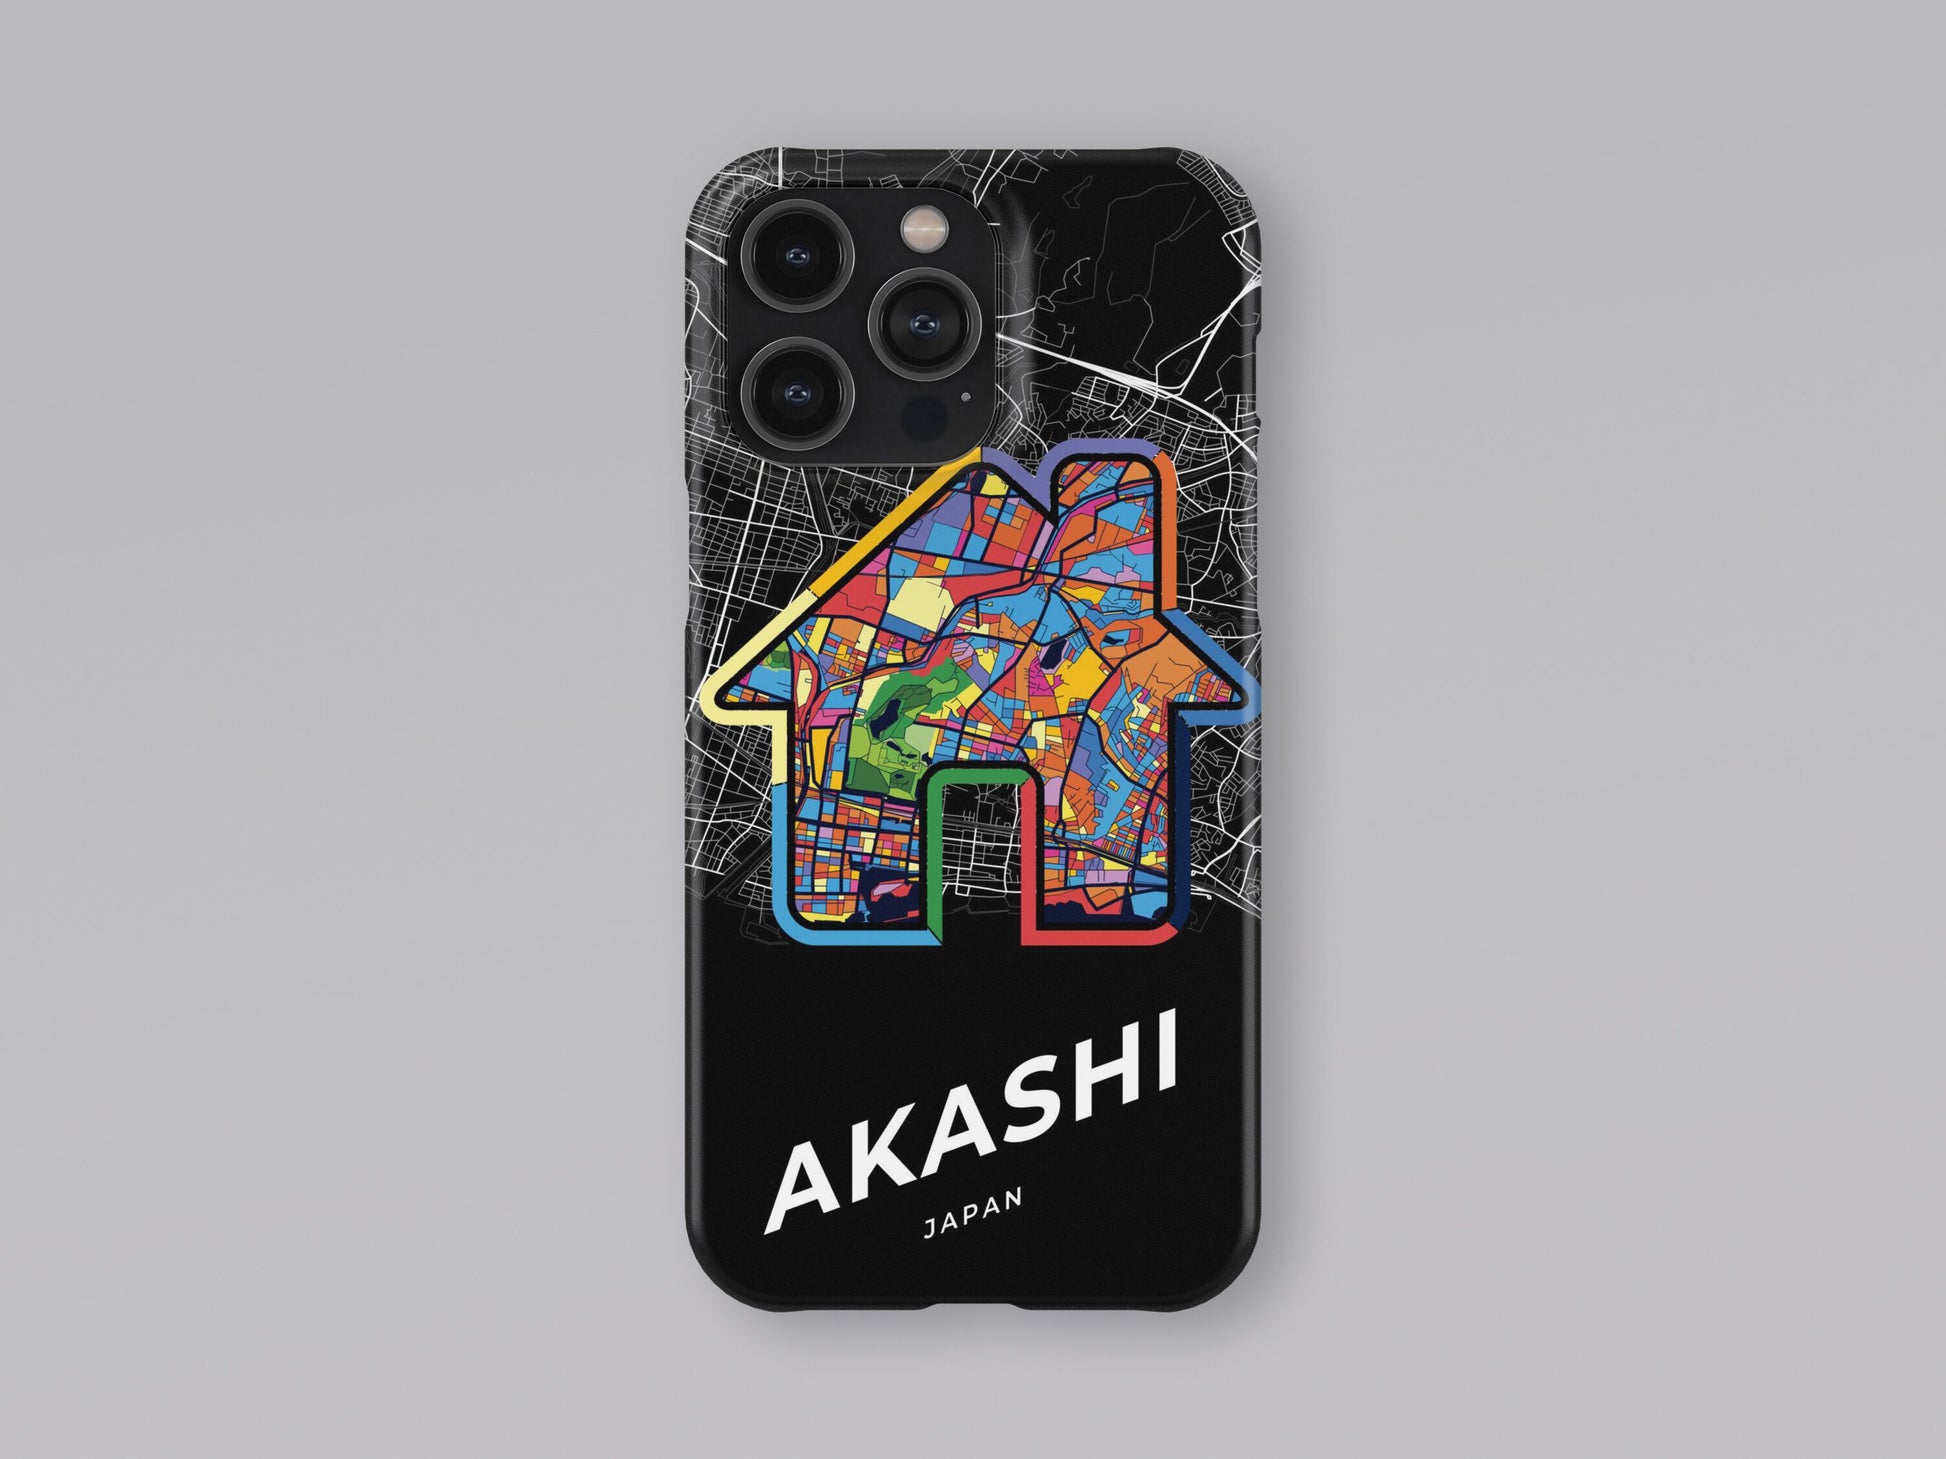 Akashi Japan slim phone case with colorful icon. Birthday, wedding or housewarming gift. Couple match cases. 3